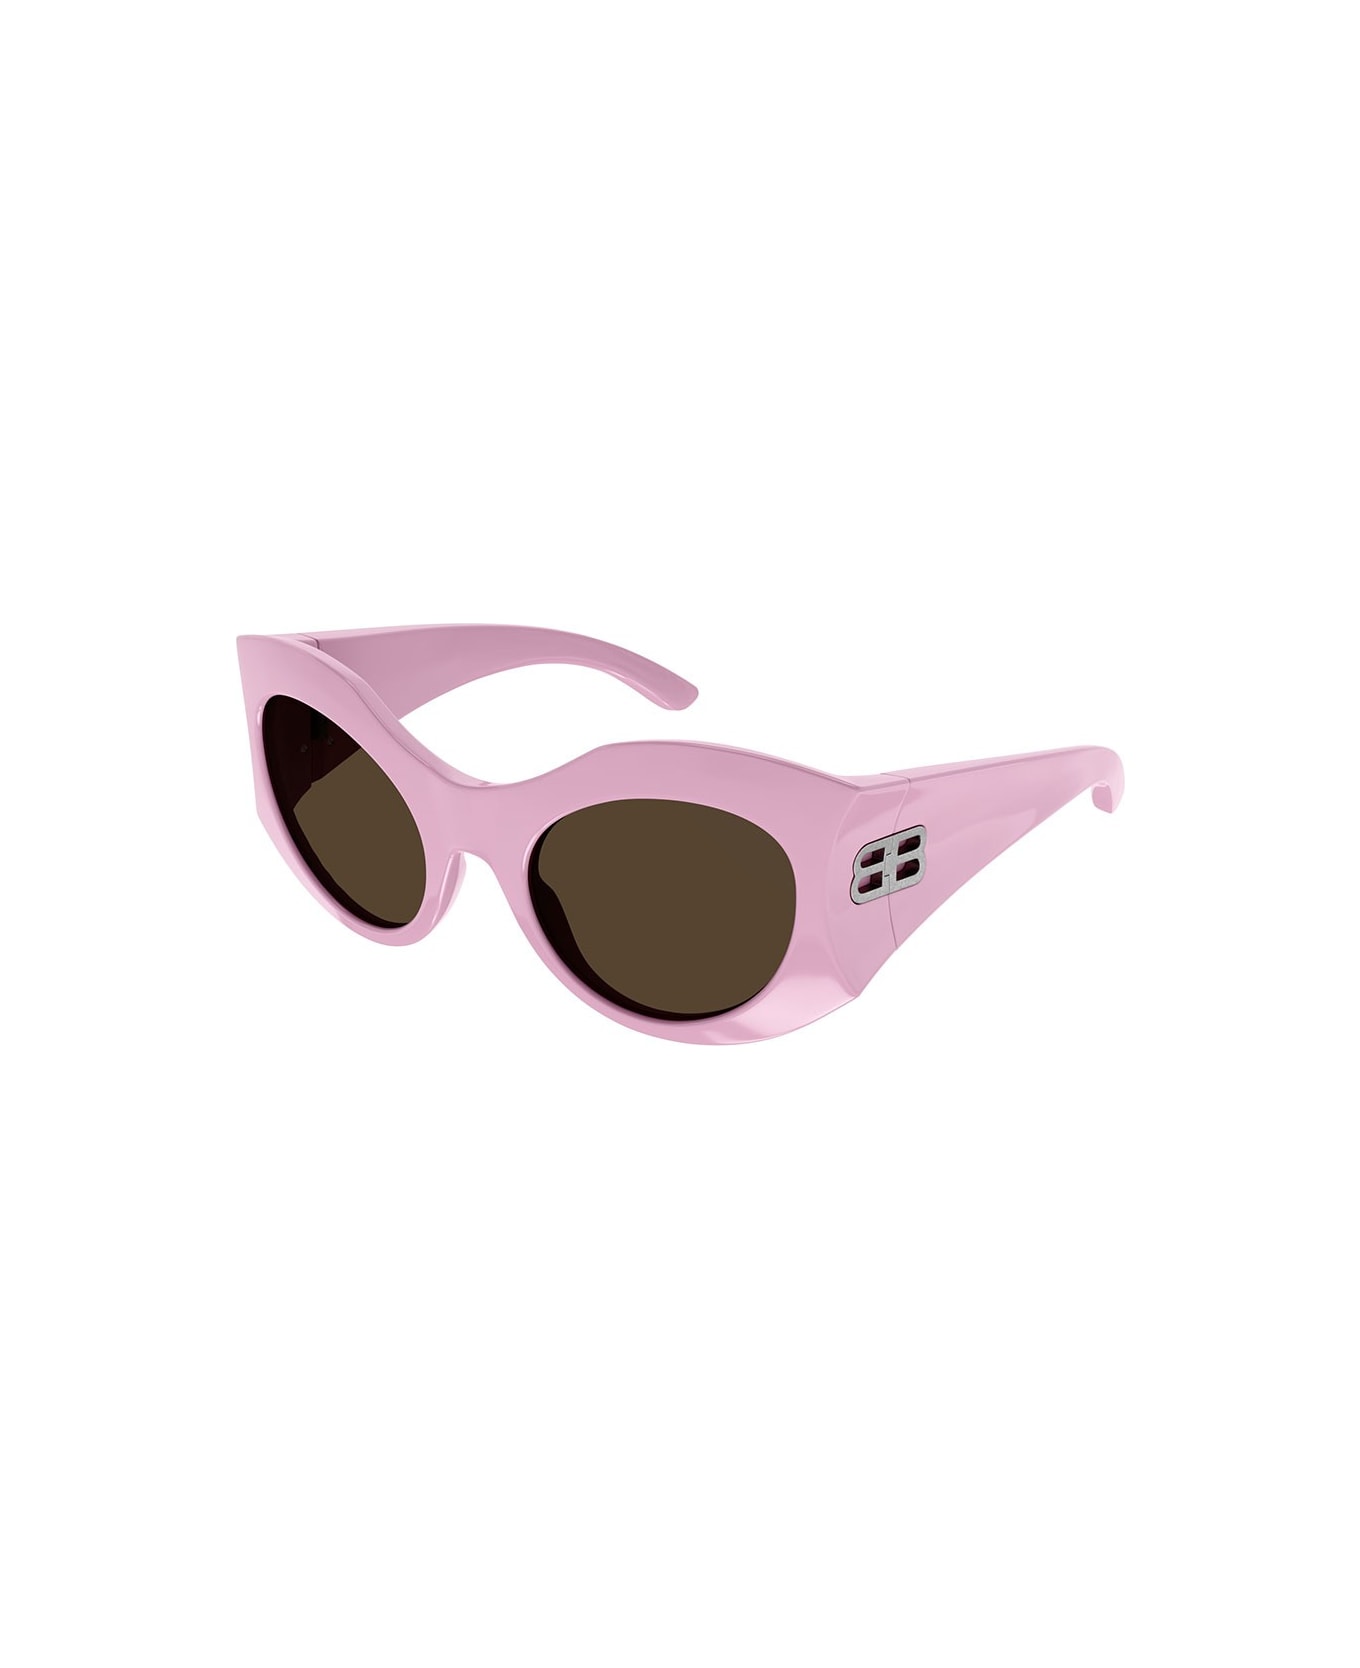 Balenciaga Eyewear Bb0256s Sunglasses - Pink Pink Brown サングラス